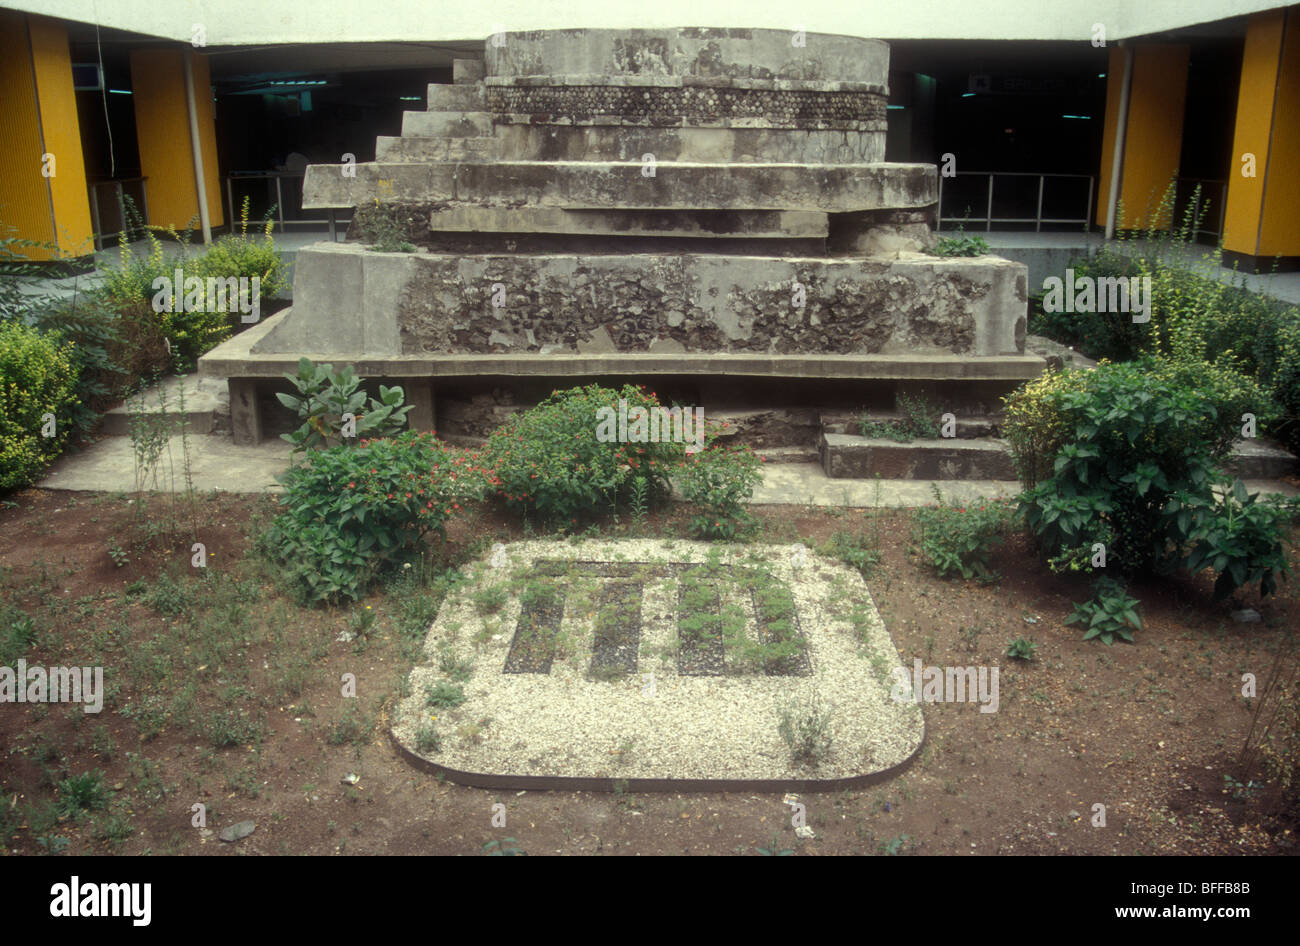 Aztec ruins in the Pino Suarez Metro subway station, Mexico City Stock Photo